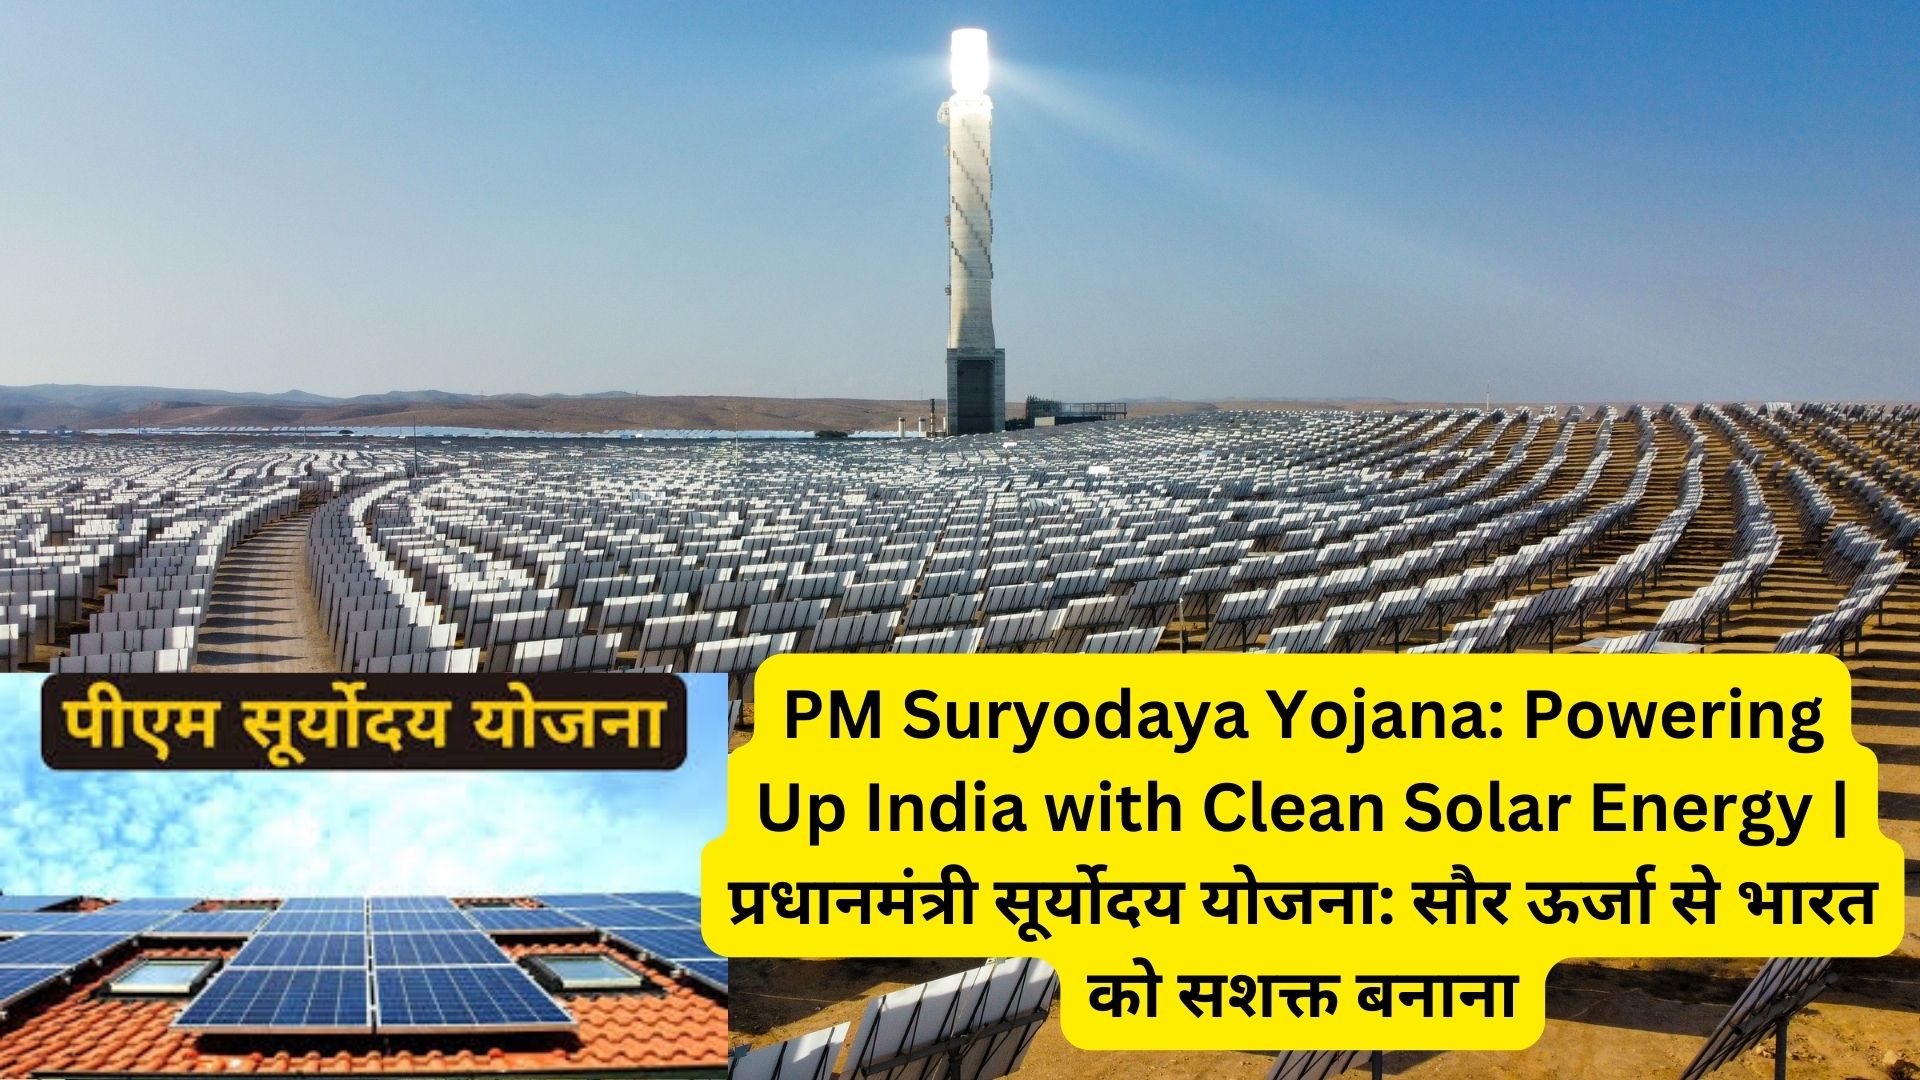 PM Suryodaya Yojana: Powering Up India with Clean Solar Energy | प्रधानमंत्री सूर्योदय योजना: सौर ऊर्जा से भारत को सशक्त बनाना